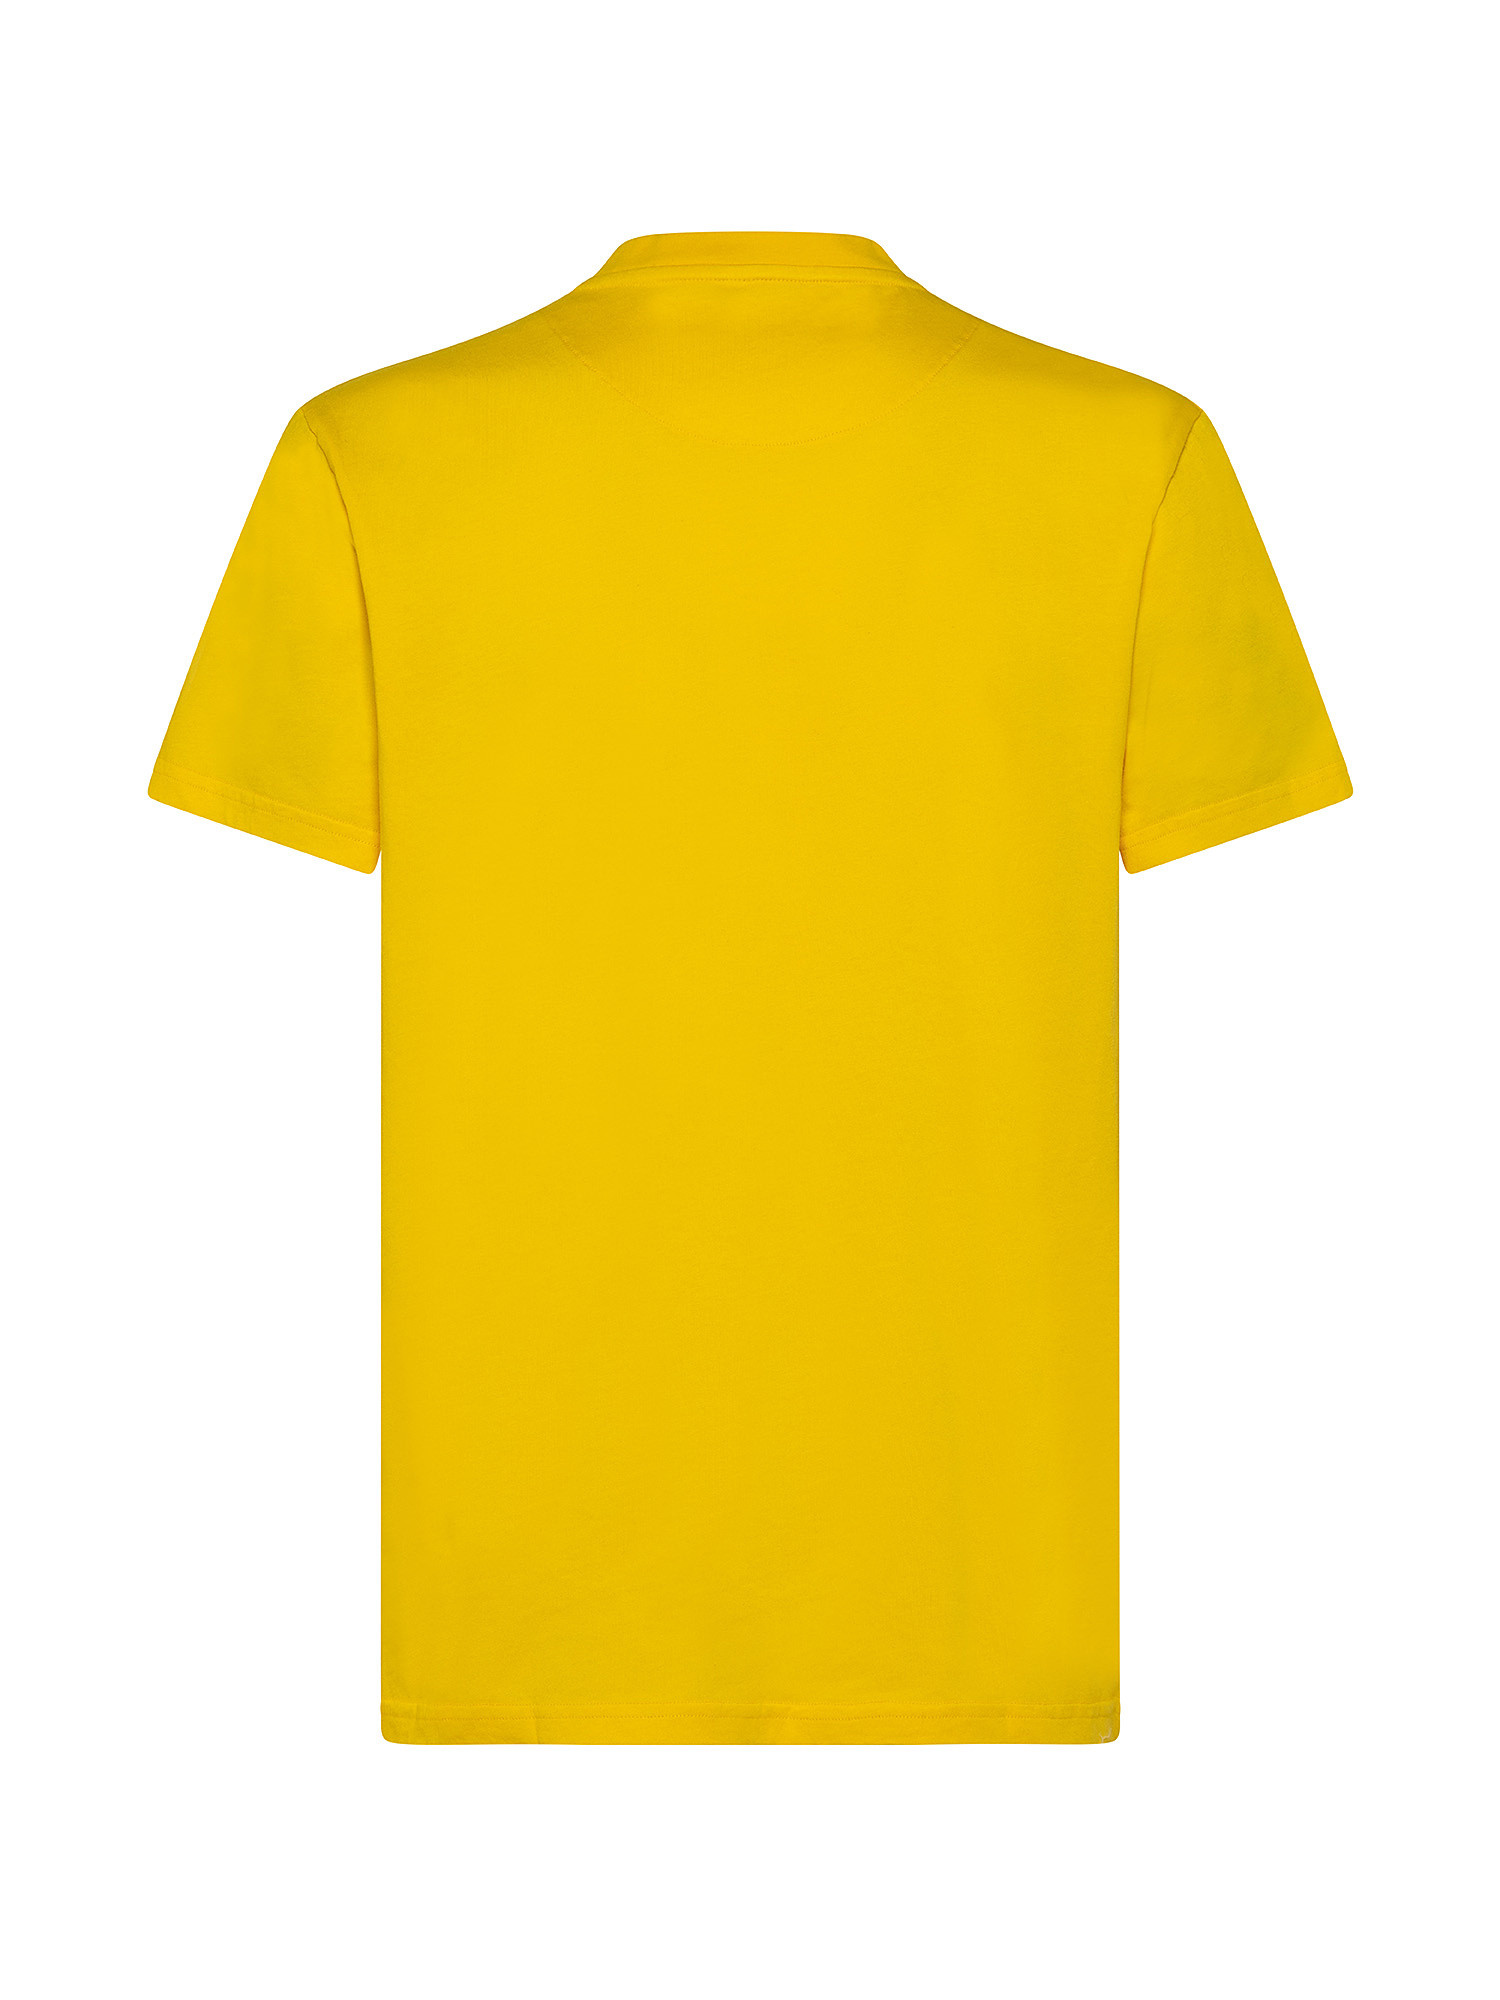 T-shirt girocollo, Giallo, large image number 1